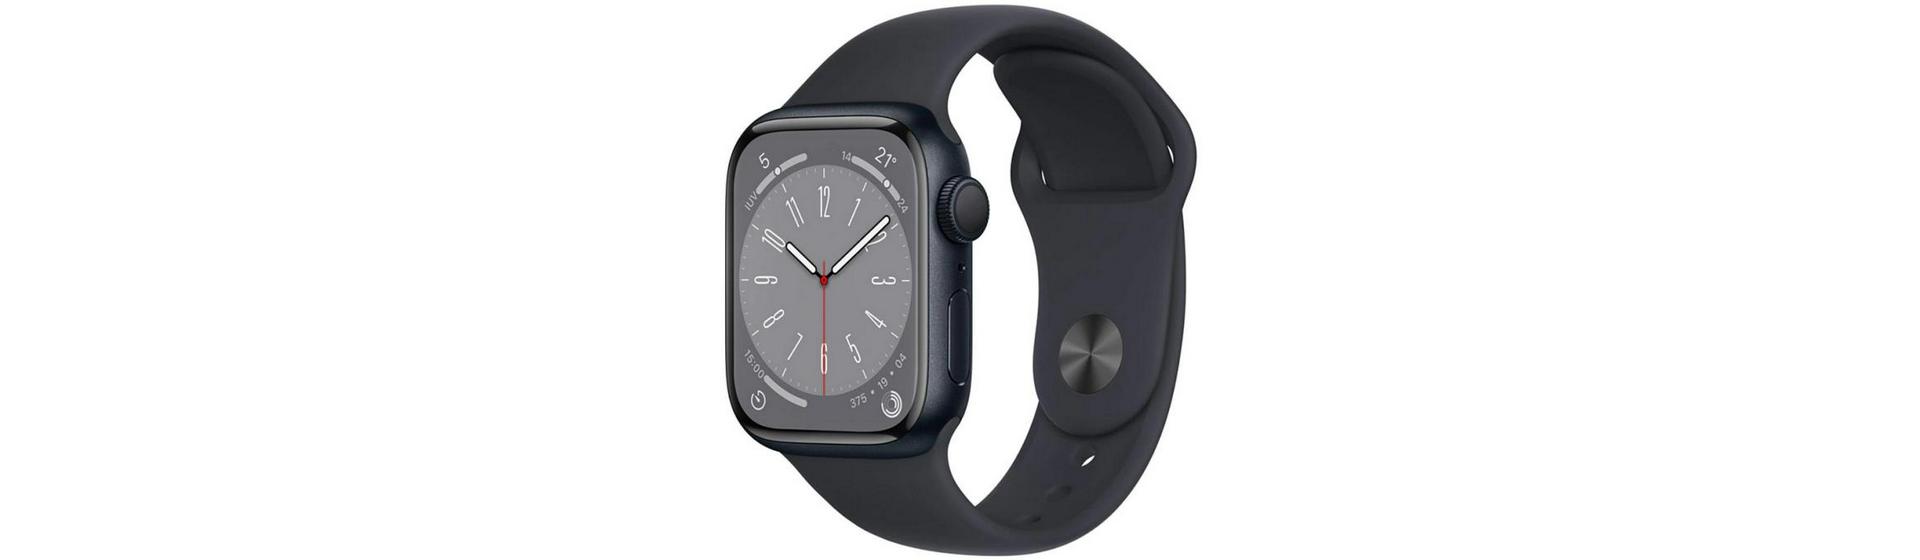 Promoção: Apple Watch Series 8 41mm 32GB no Buscapé